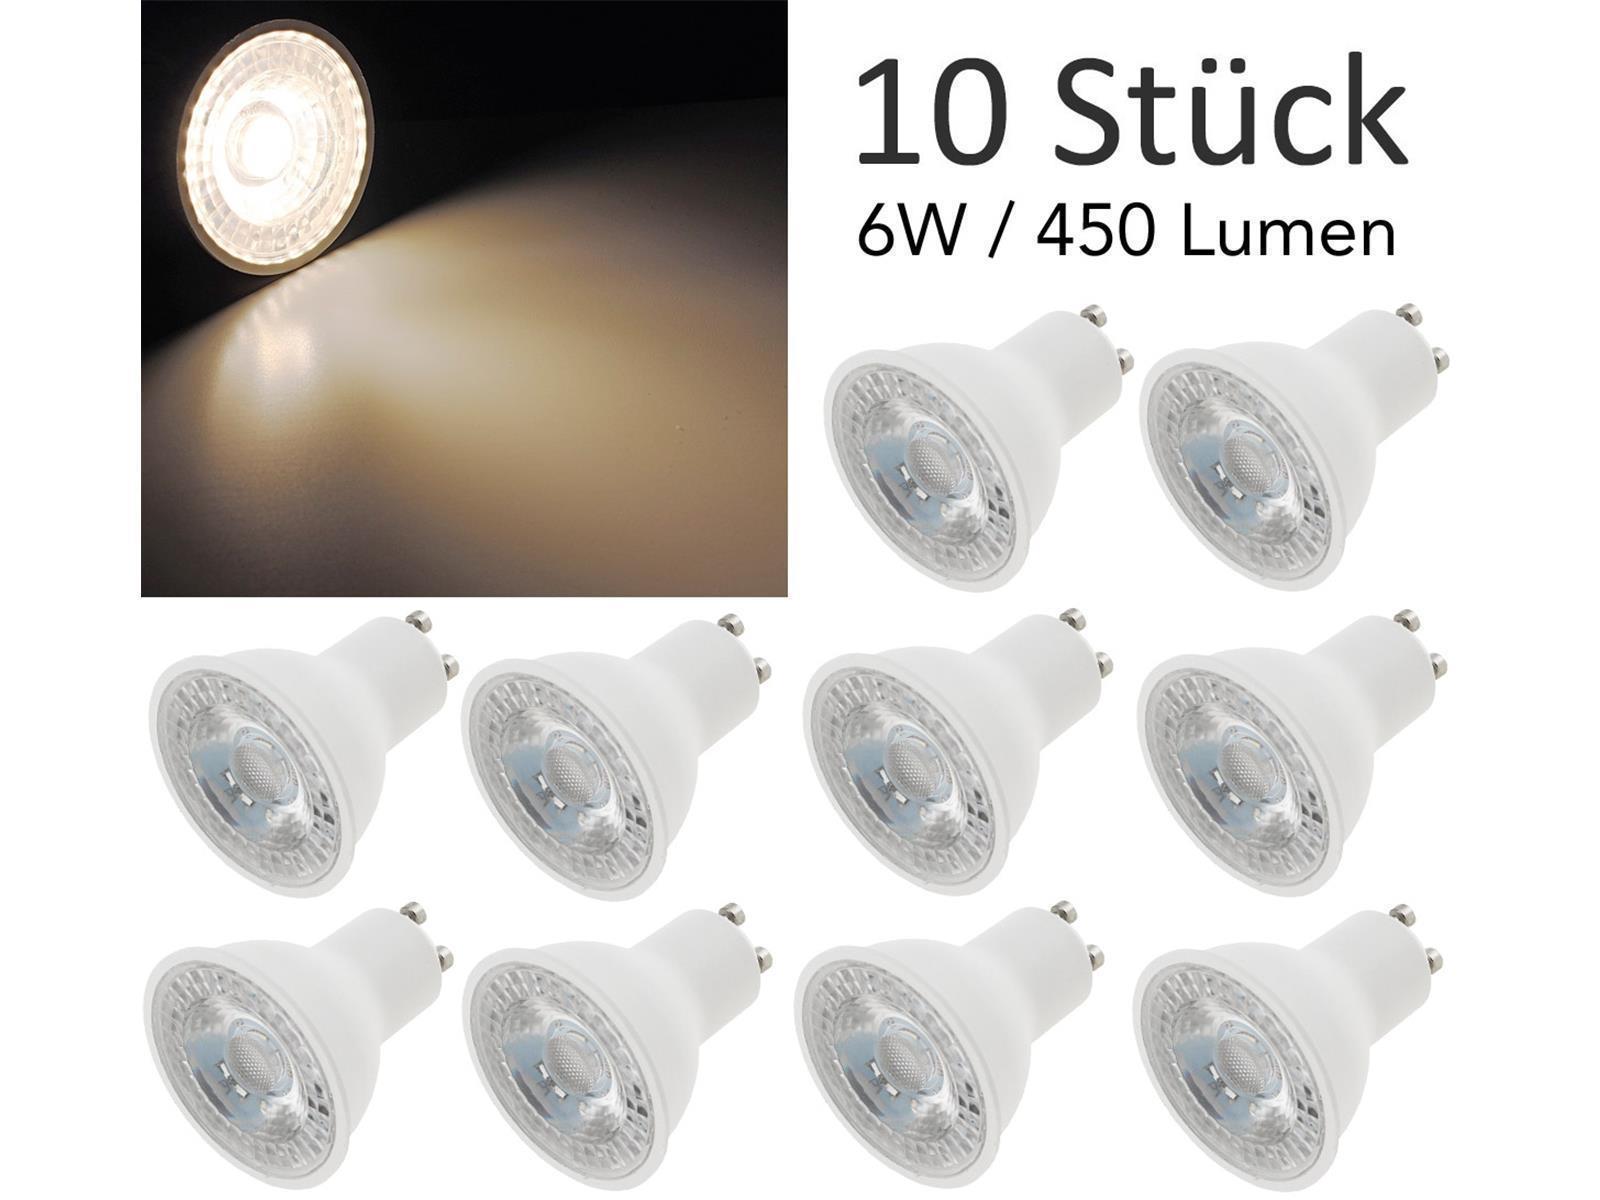 LED Strahler GU10 "H50 Promo2" 10er-Pack3000k, 450lm, 230V/6W, 38°, warmweiß